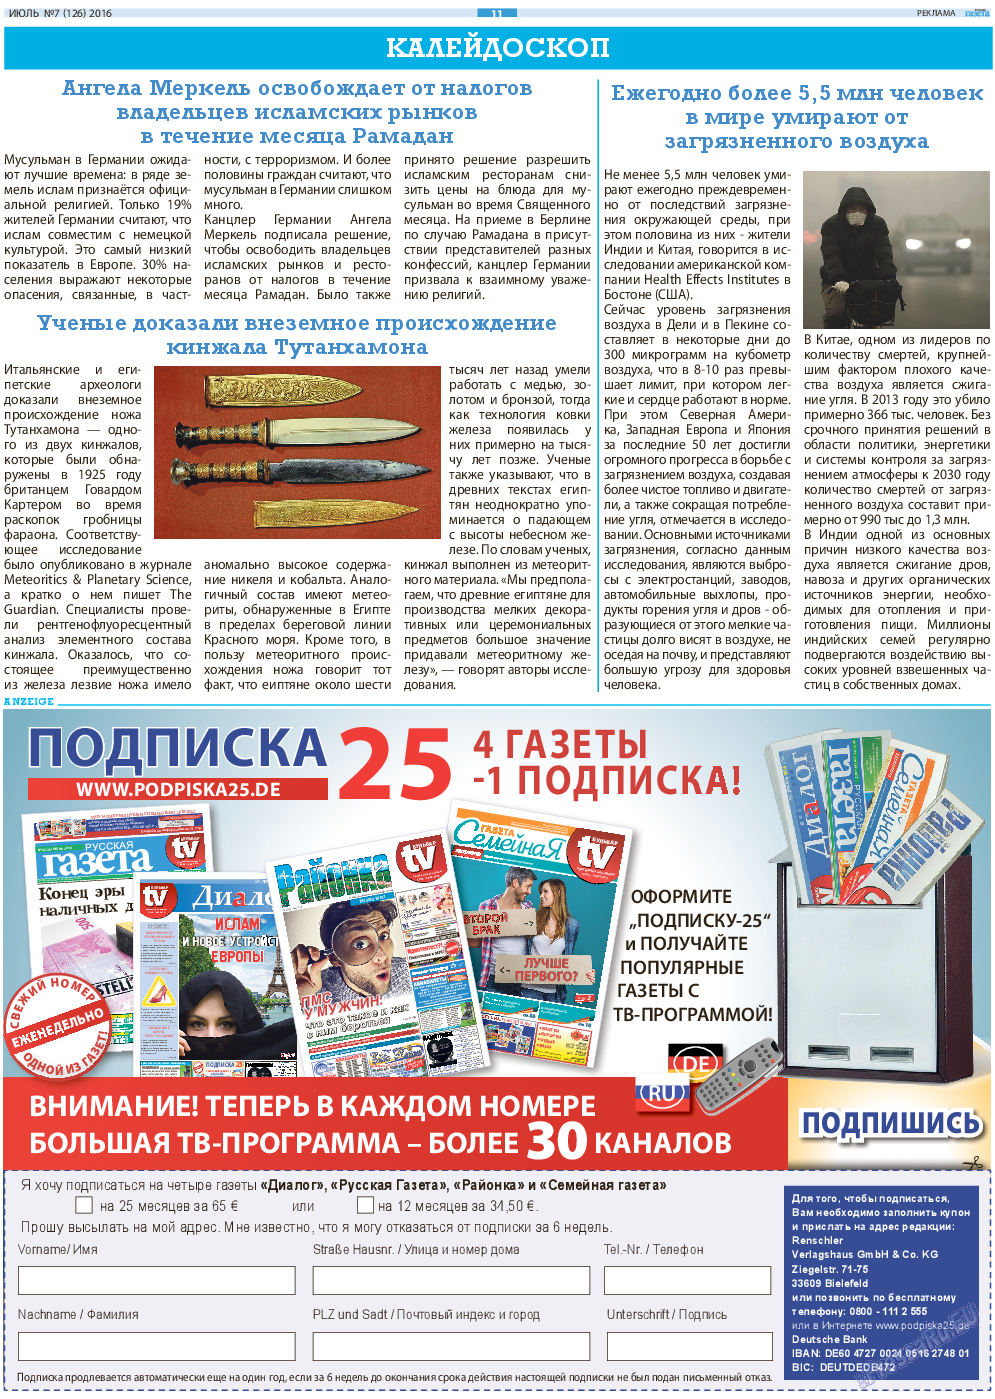 Русская Газета, газета. 2016 №7 стр.11